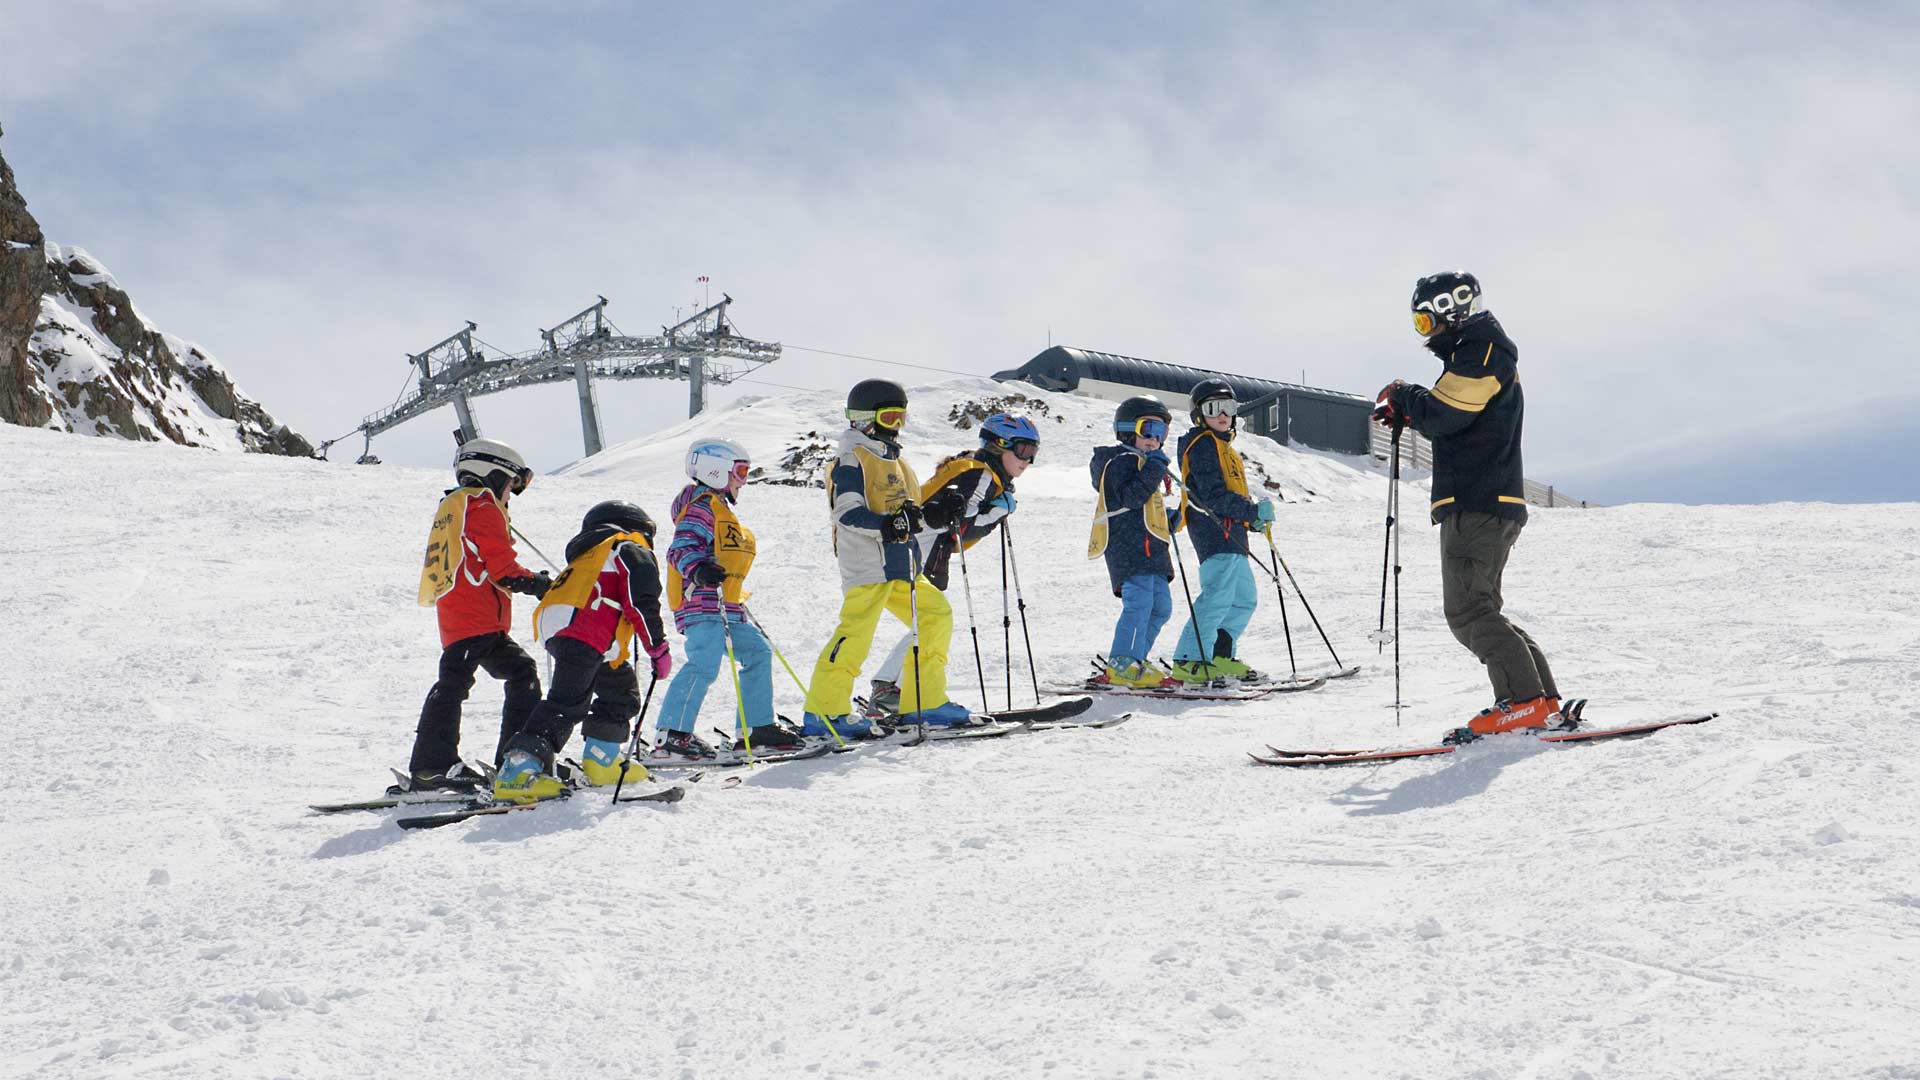 small groups in the childrens ski course at the stubai glacier